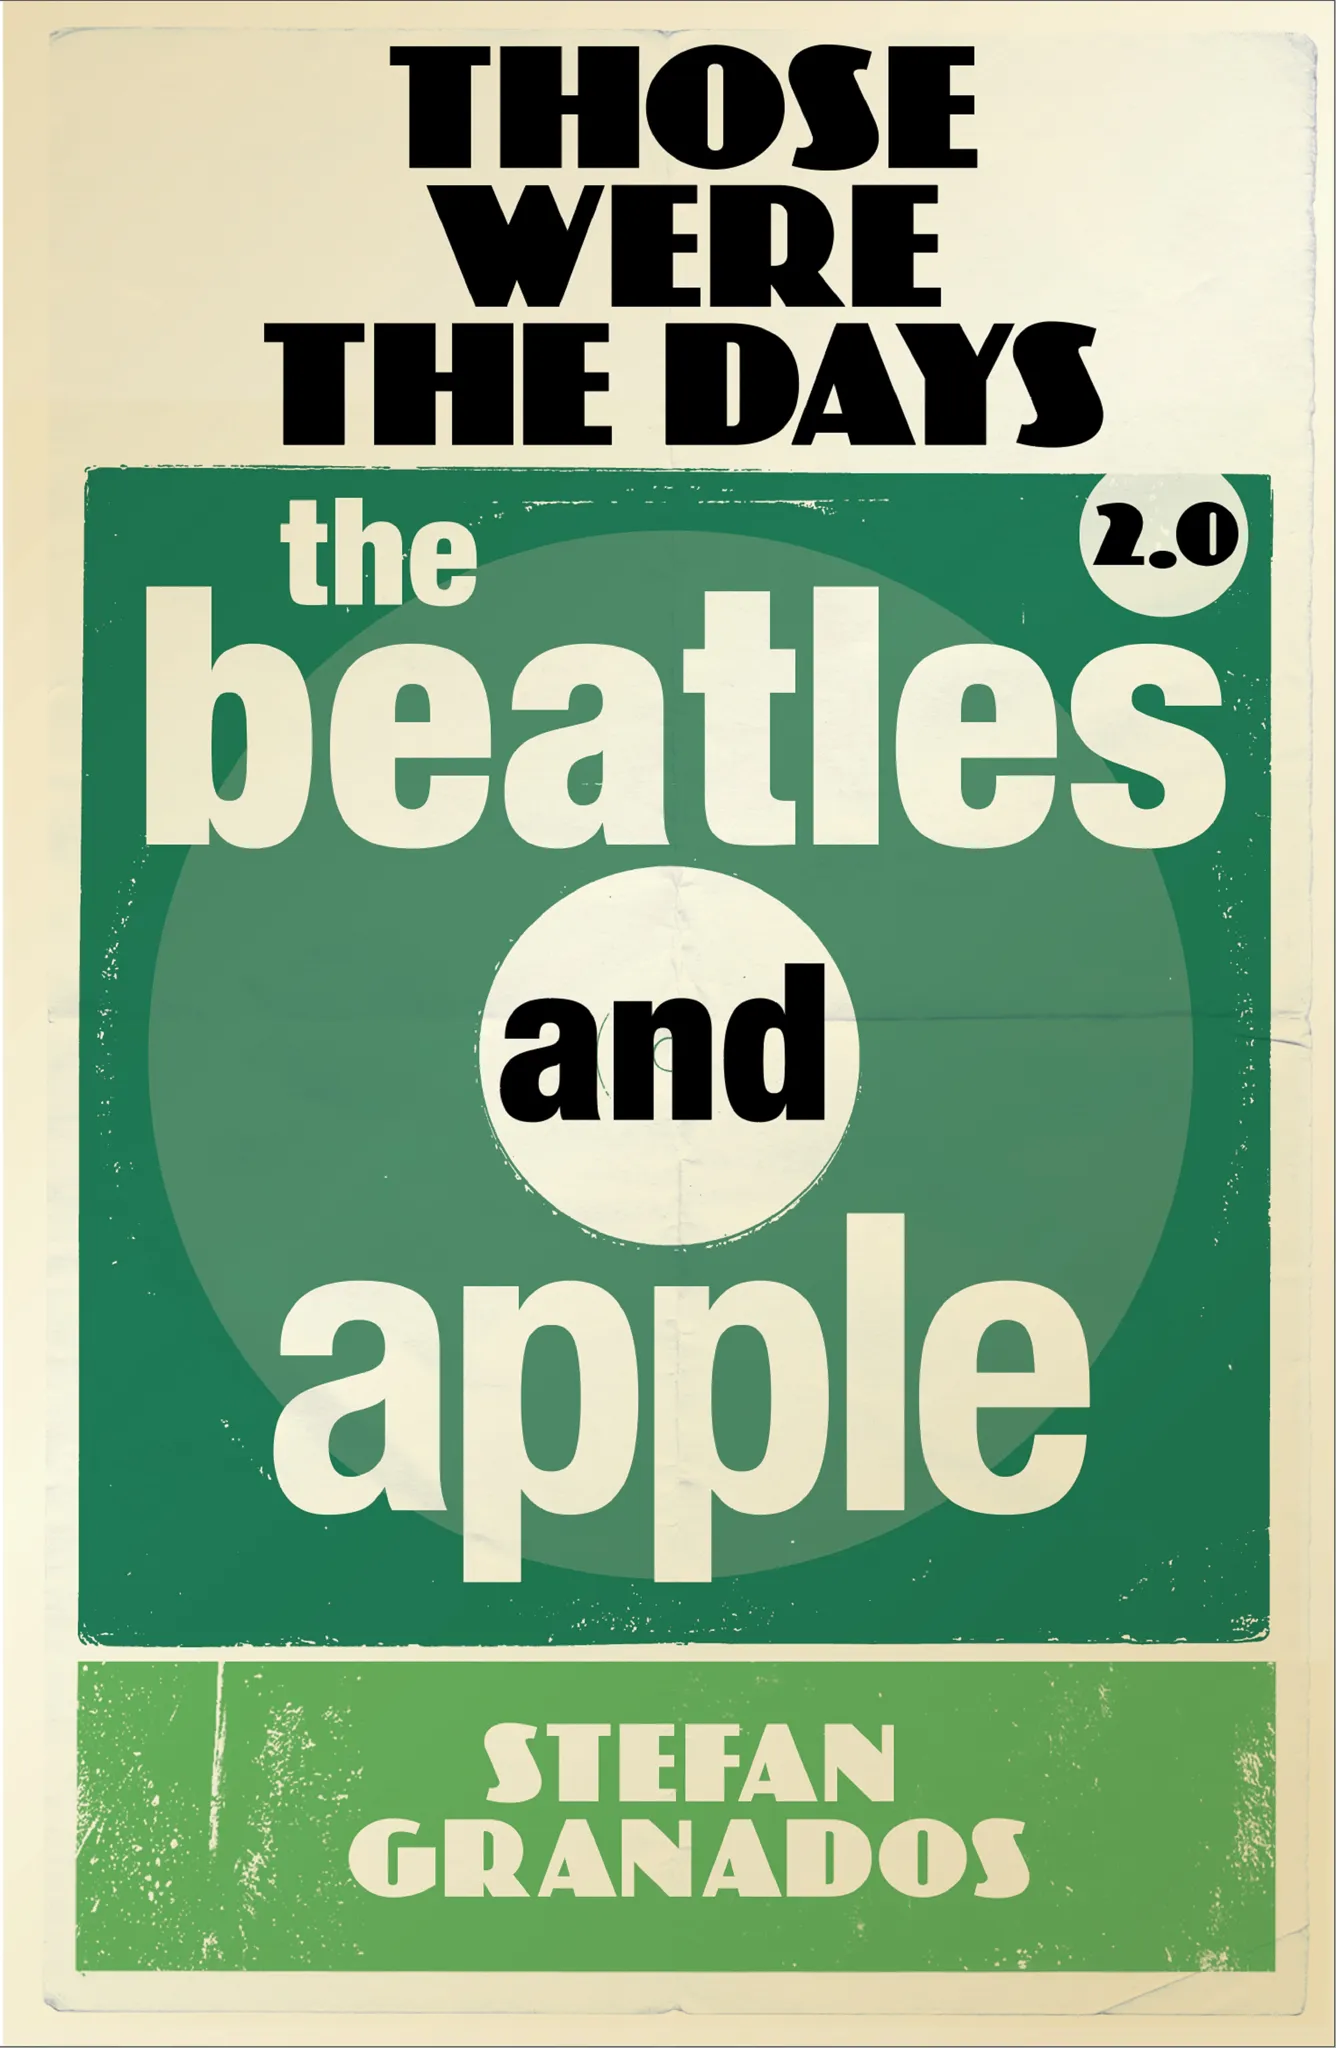 Stefann Granados |  Book | Those Were the Days 2.0: The Beatles